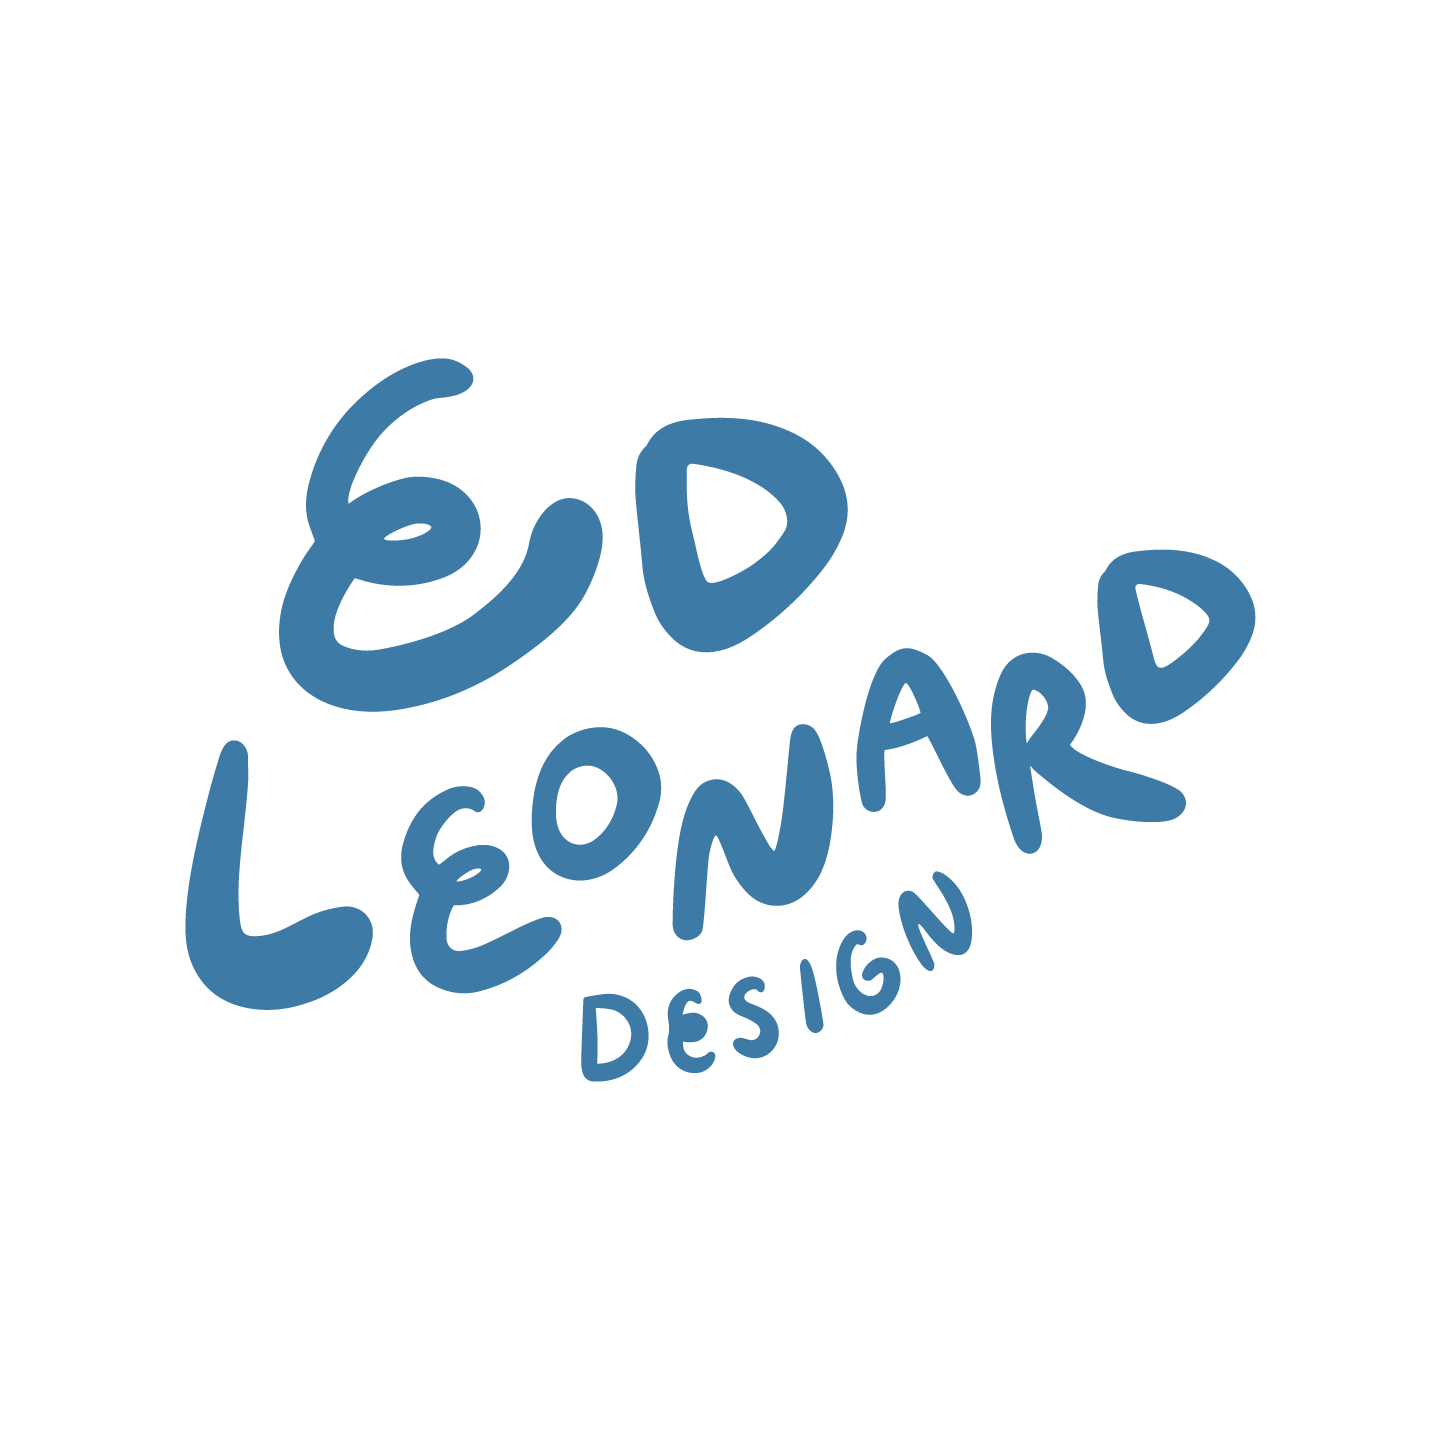 Ed Leonard Design